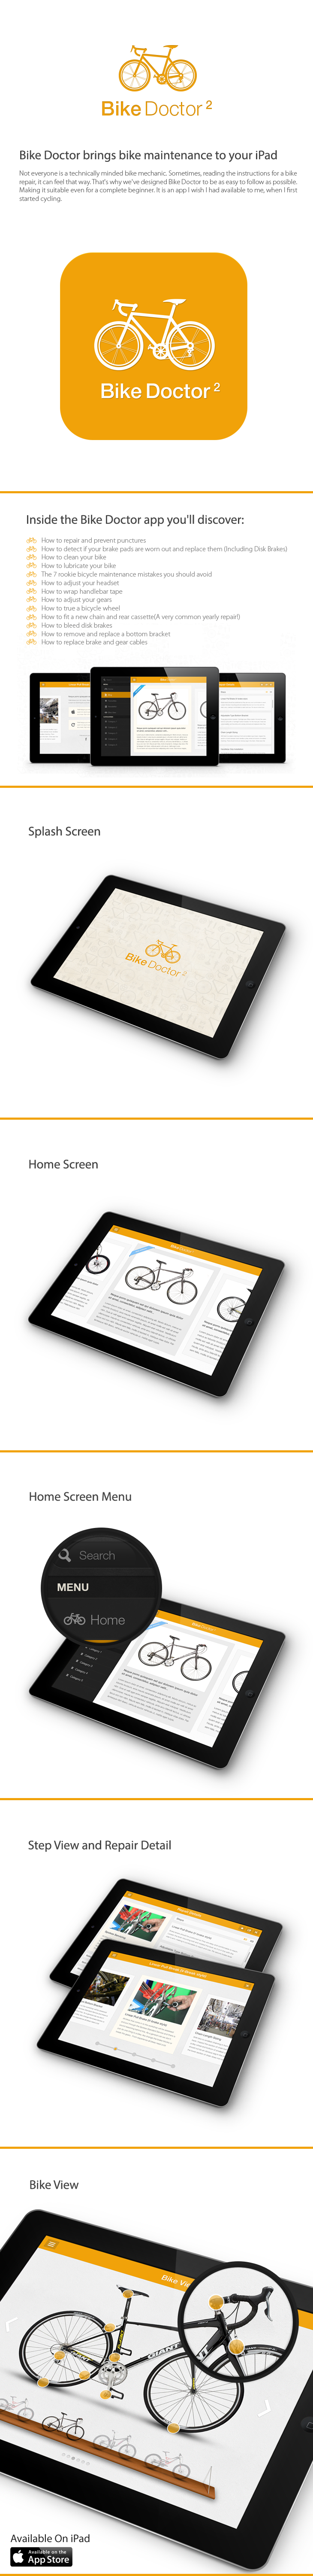 Bike Doctor 2 Bike Doctor IPad UI iPad UX 